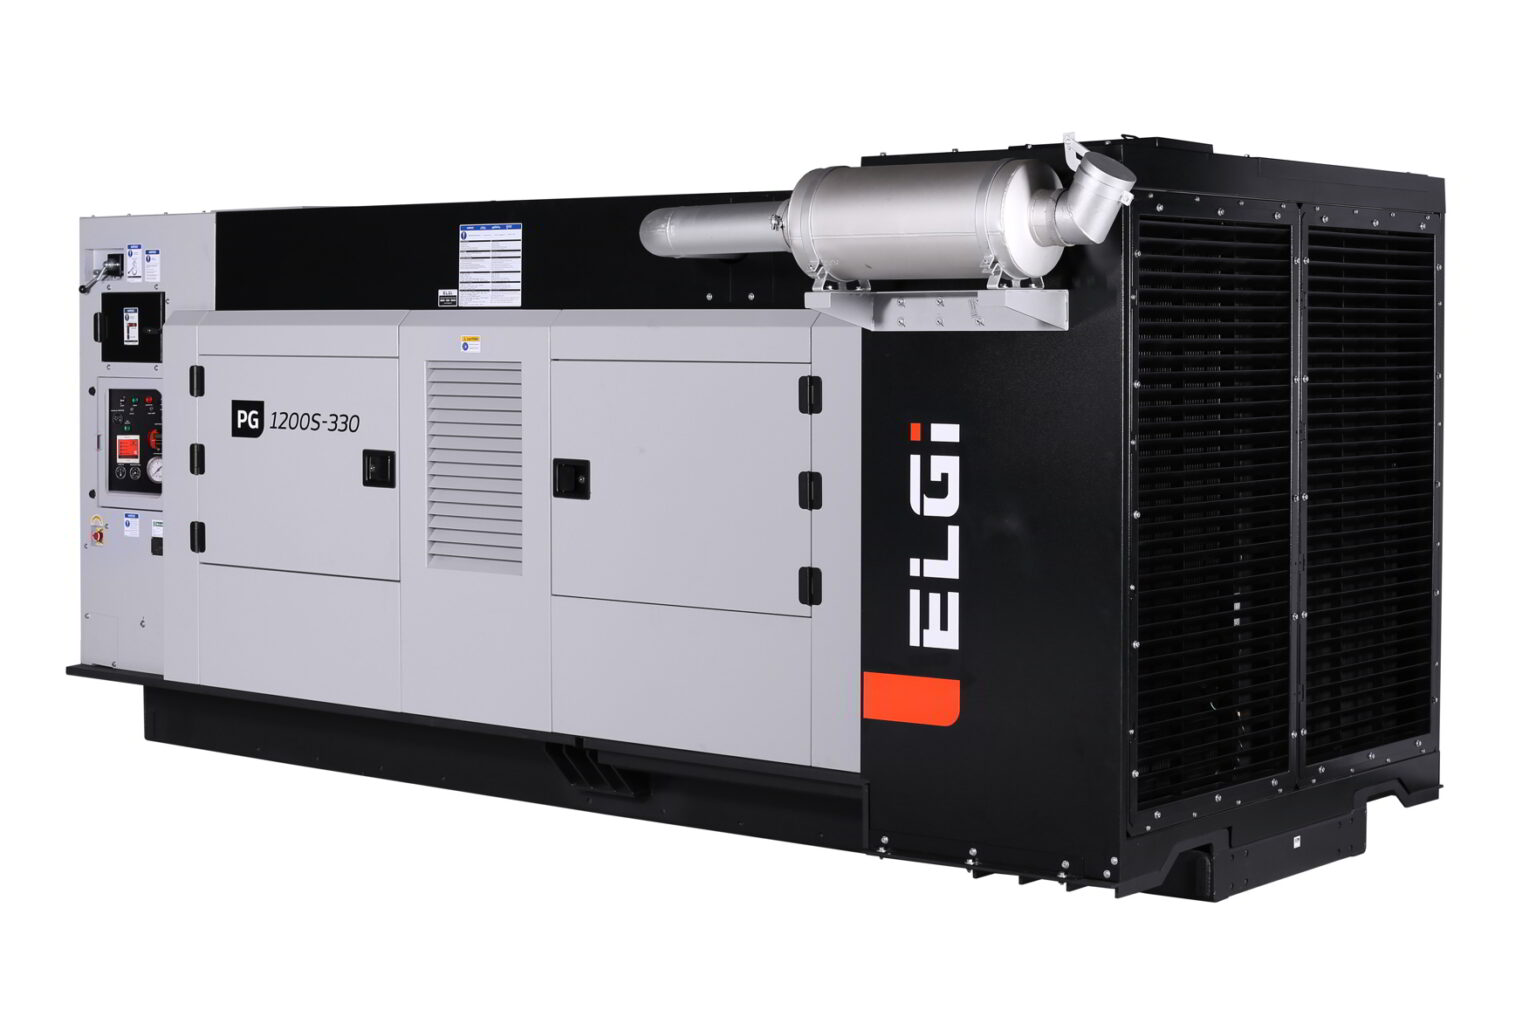 ELGi PG 1200S-330 – Aust Air Compressors